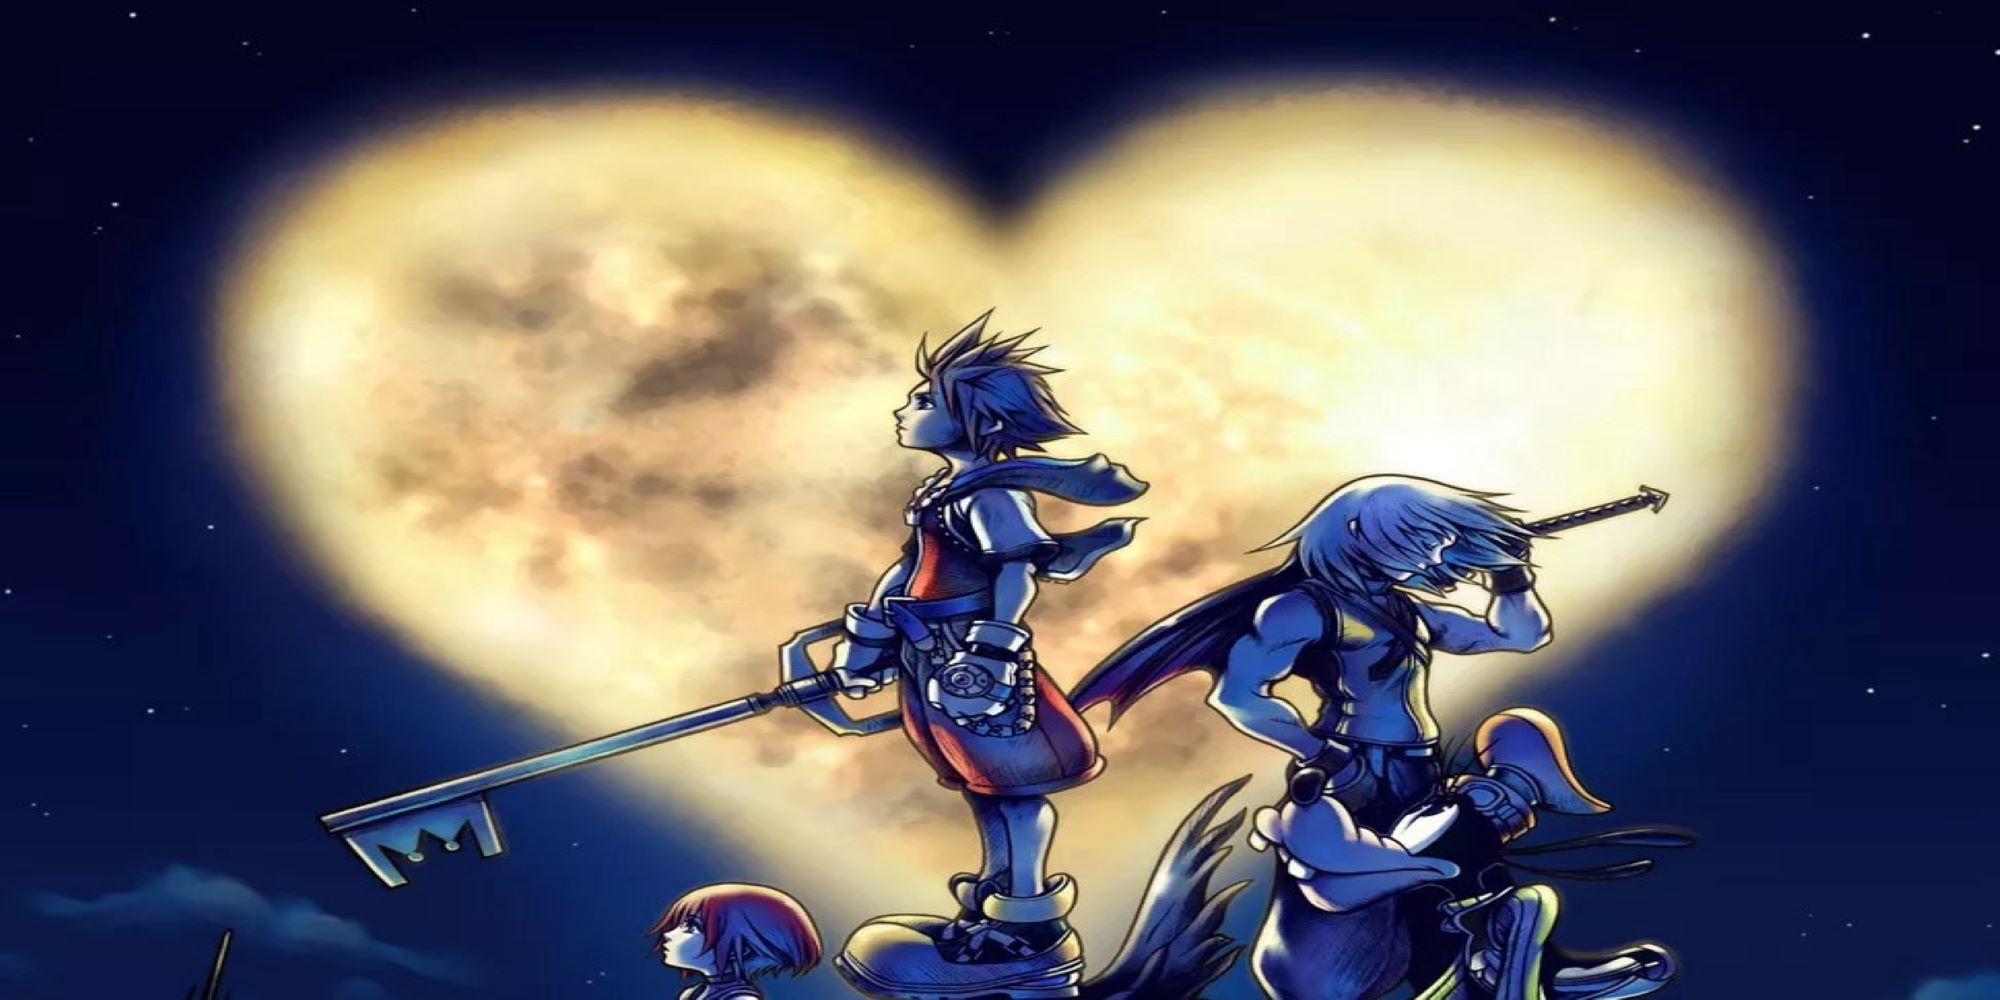 Kingdom Hearts key art depicting Sora and Riku with Keyblades against a heart-shaped moon